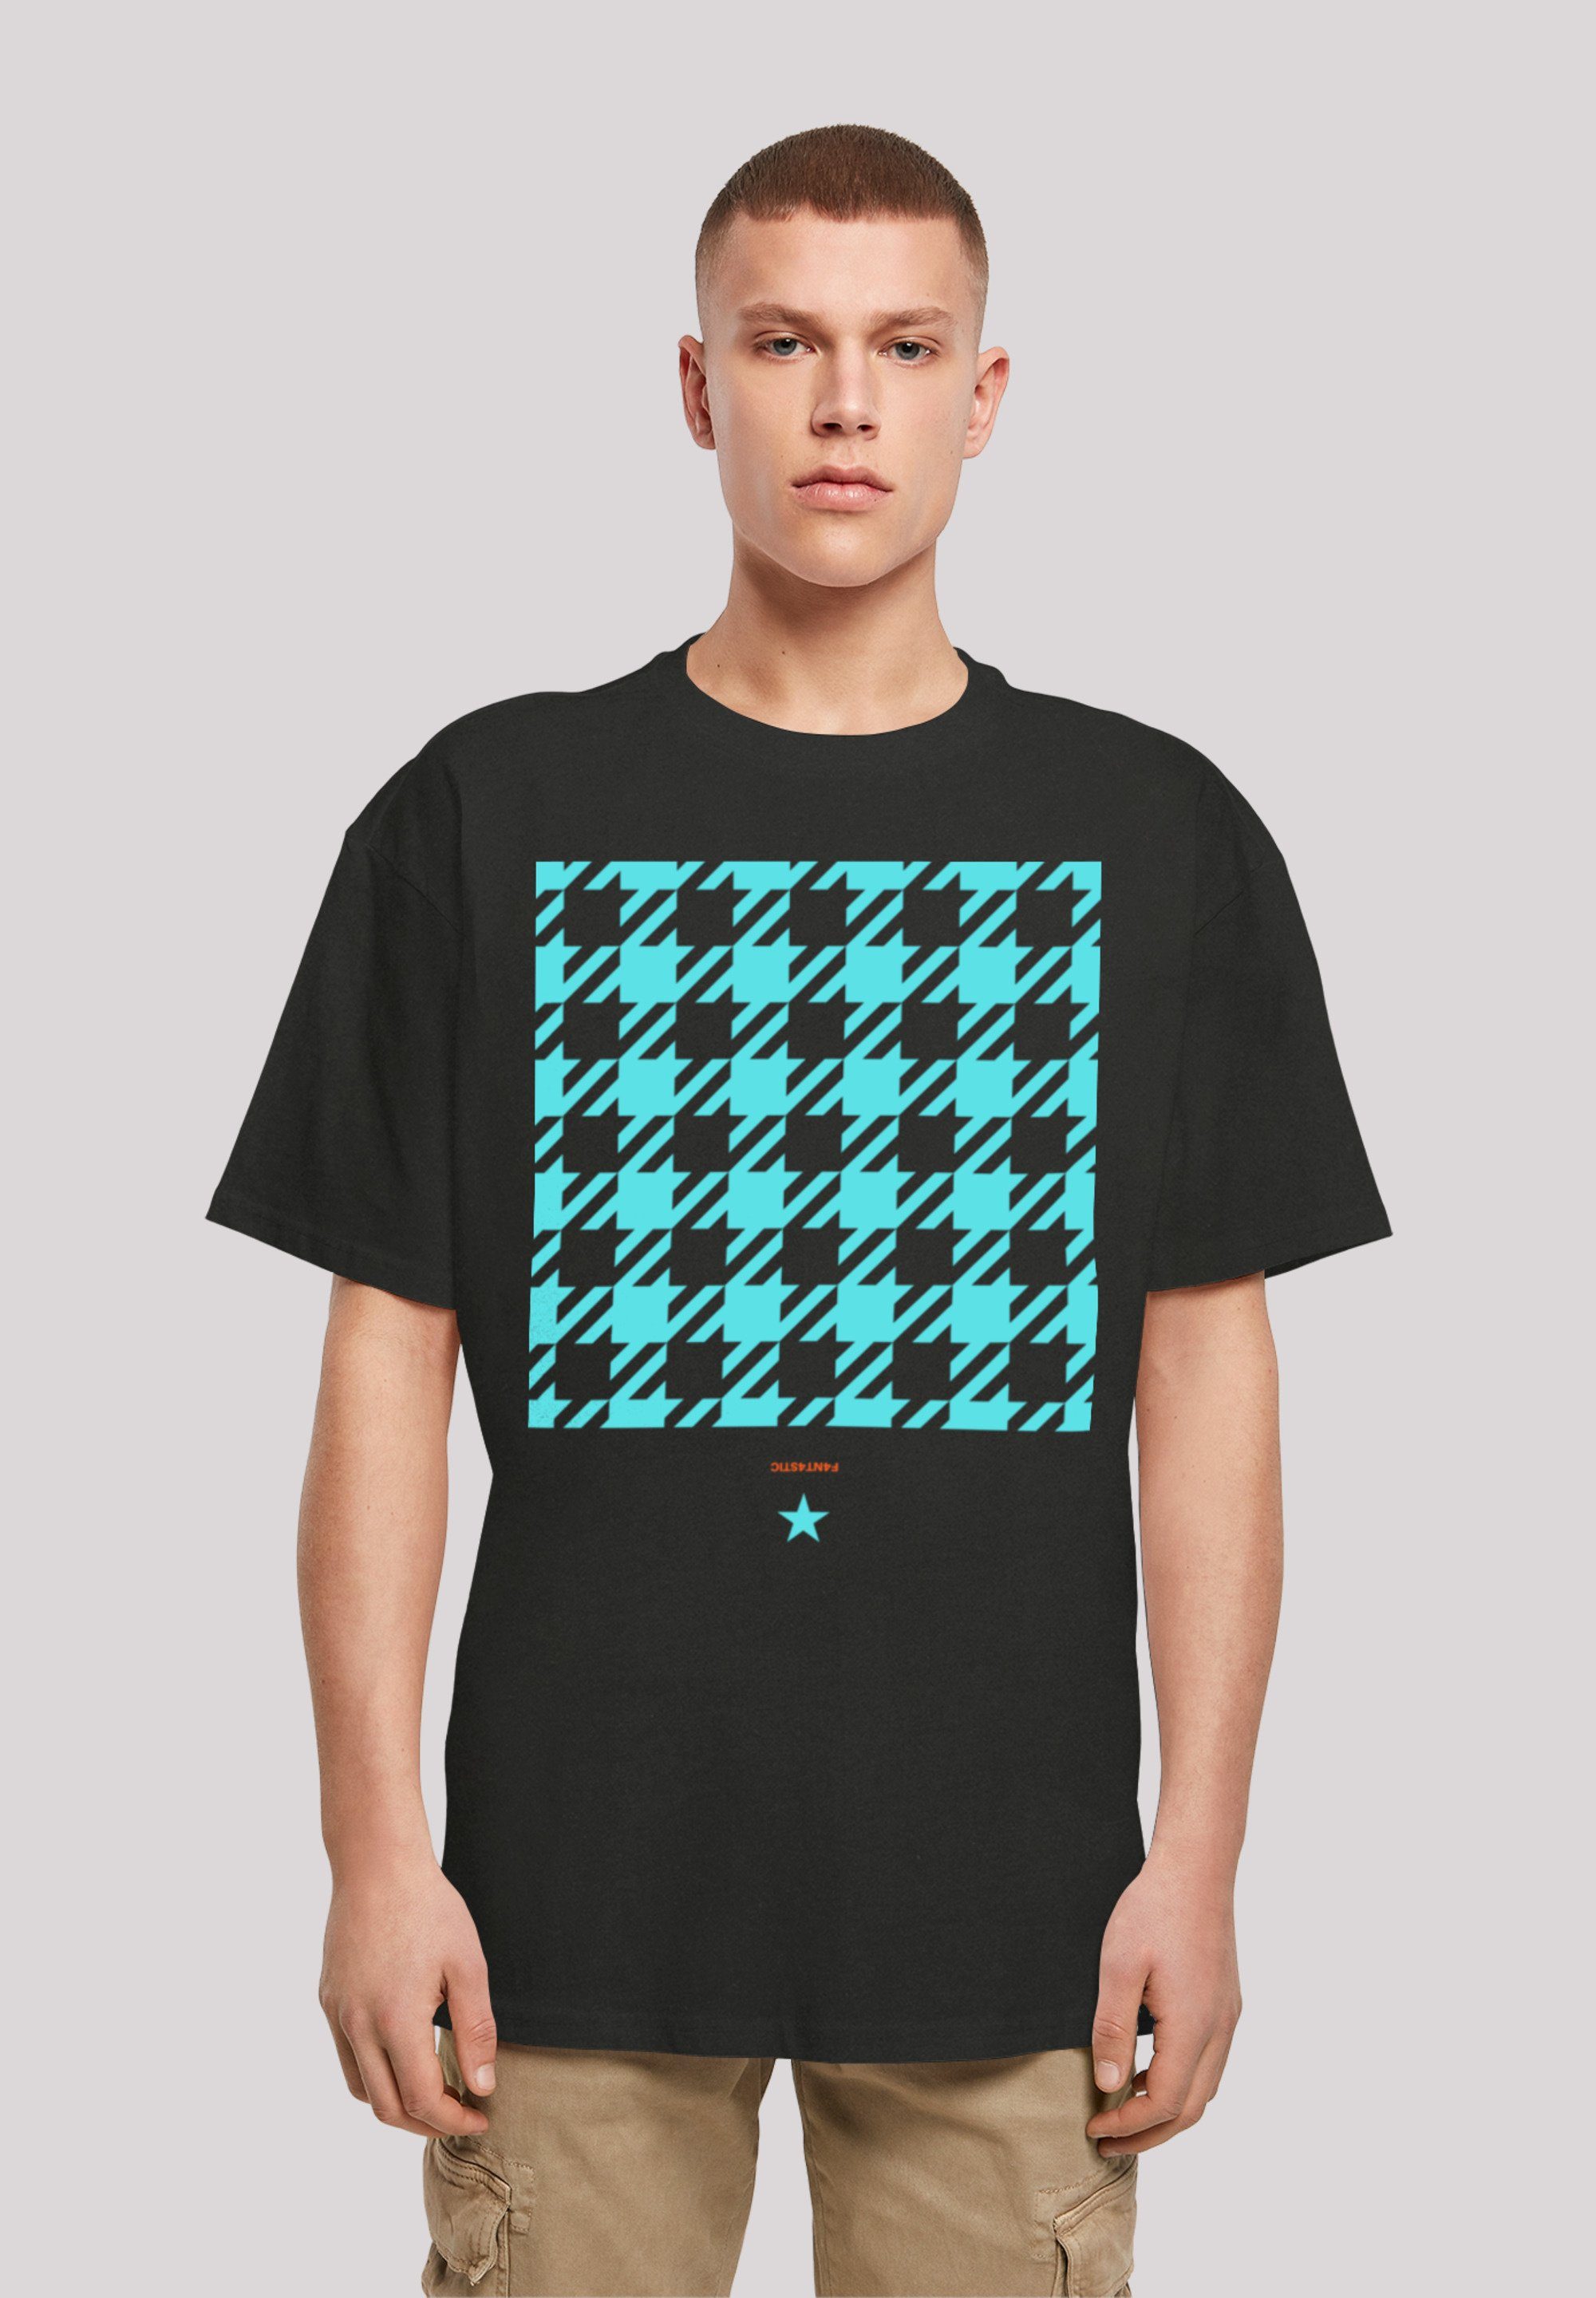 F4NT4STIC T-Shirt Hahnentritt Karo blau Print schwarz